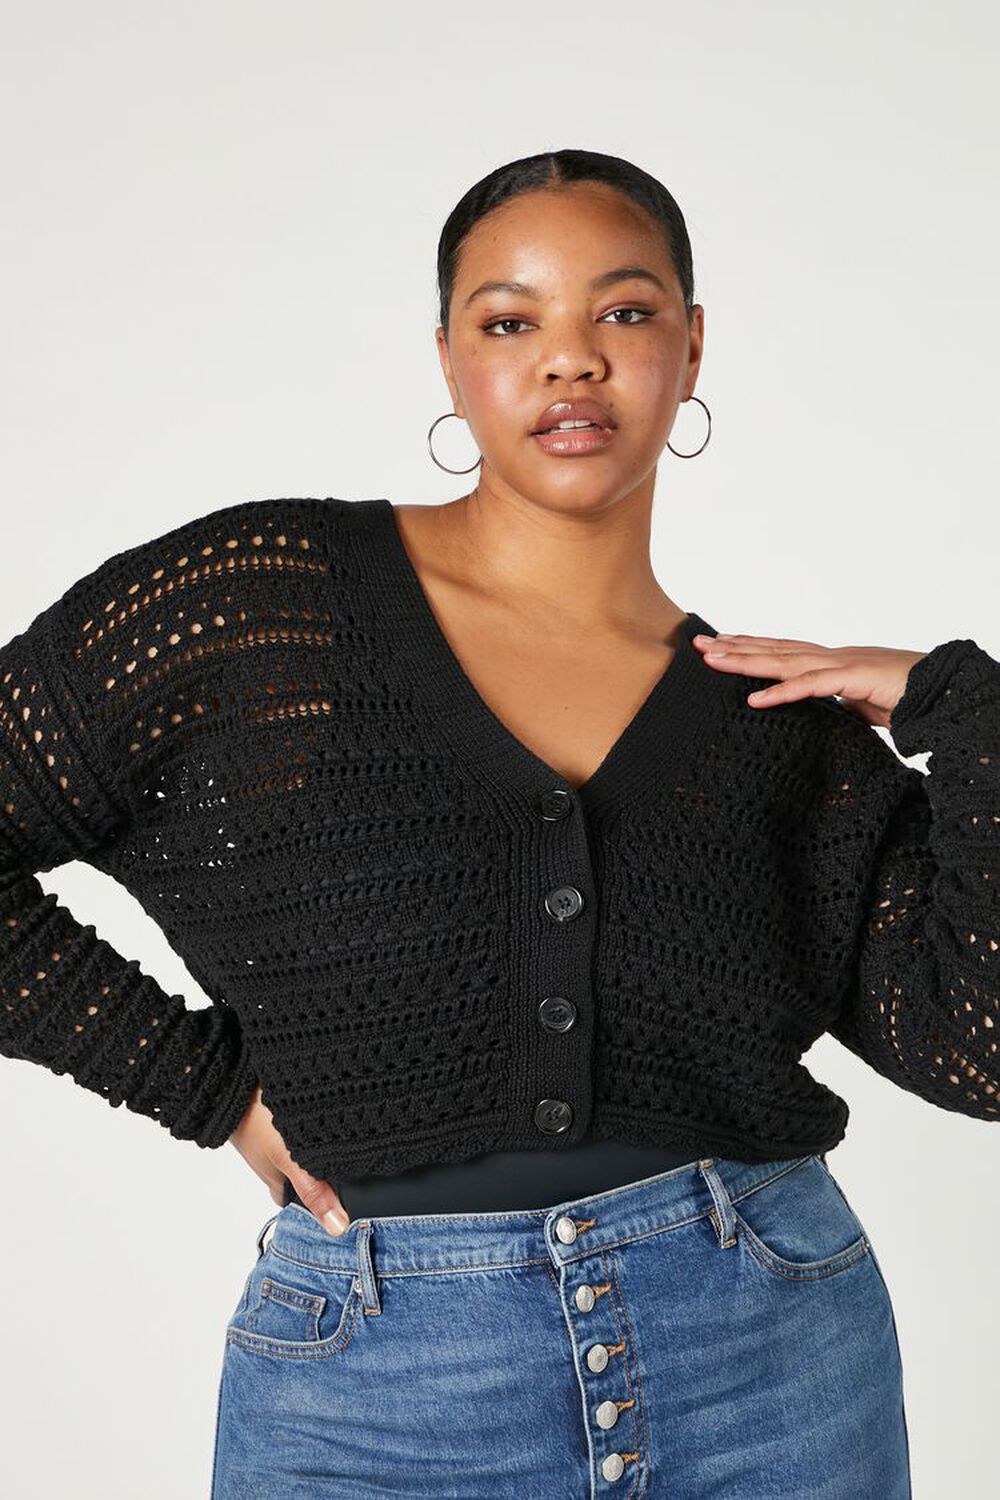 fraktion panel flyde Plus Size Crochet Cardigan Sweater